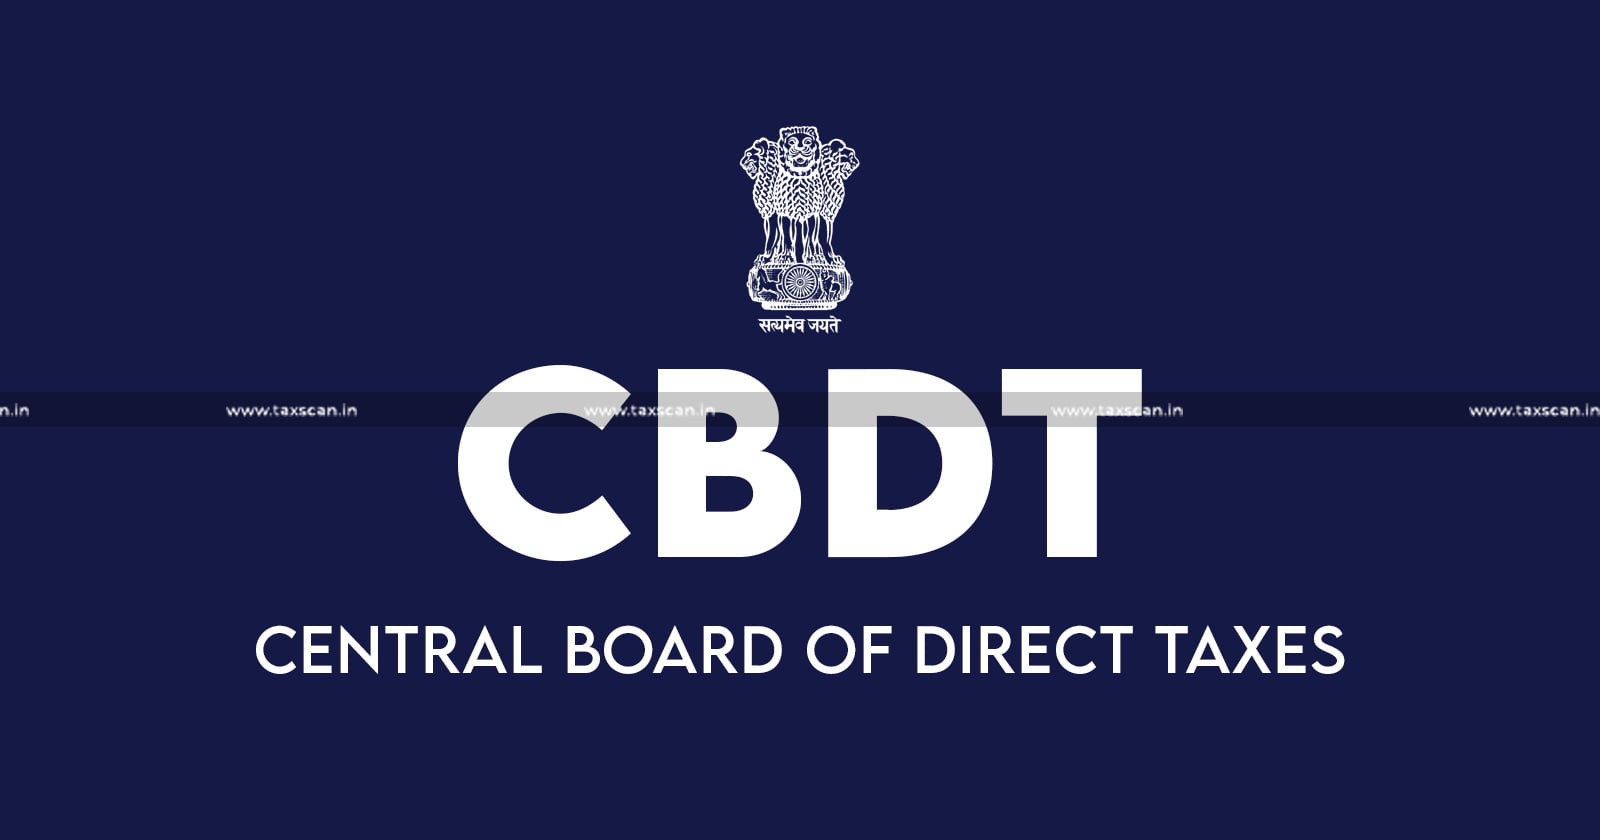 CBDT - IRS Officer Sanjay Kumar - IRS Officer - Central Board of Direct Taxes - CBDT judicial member - taxscan